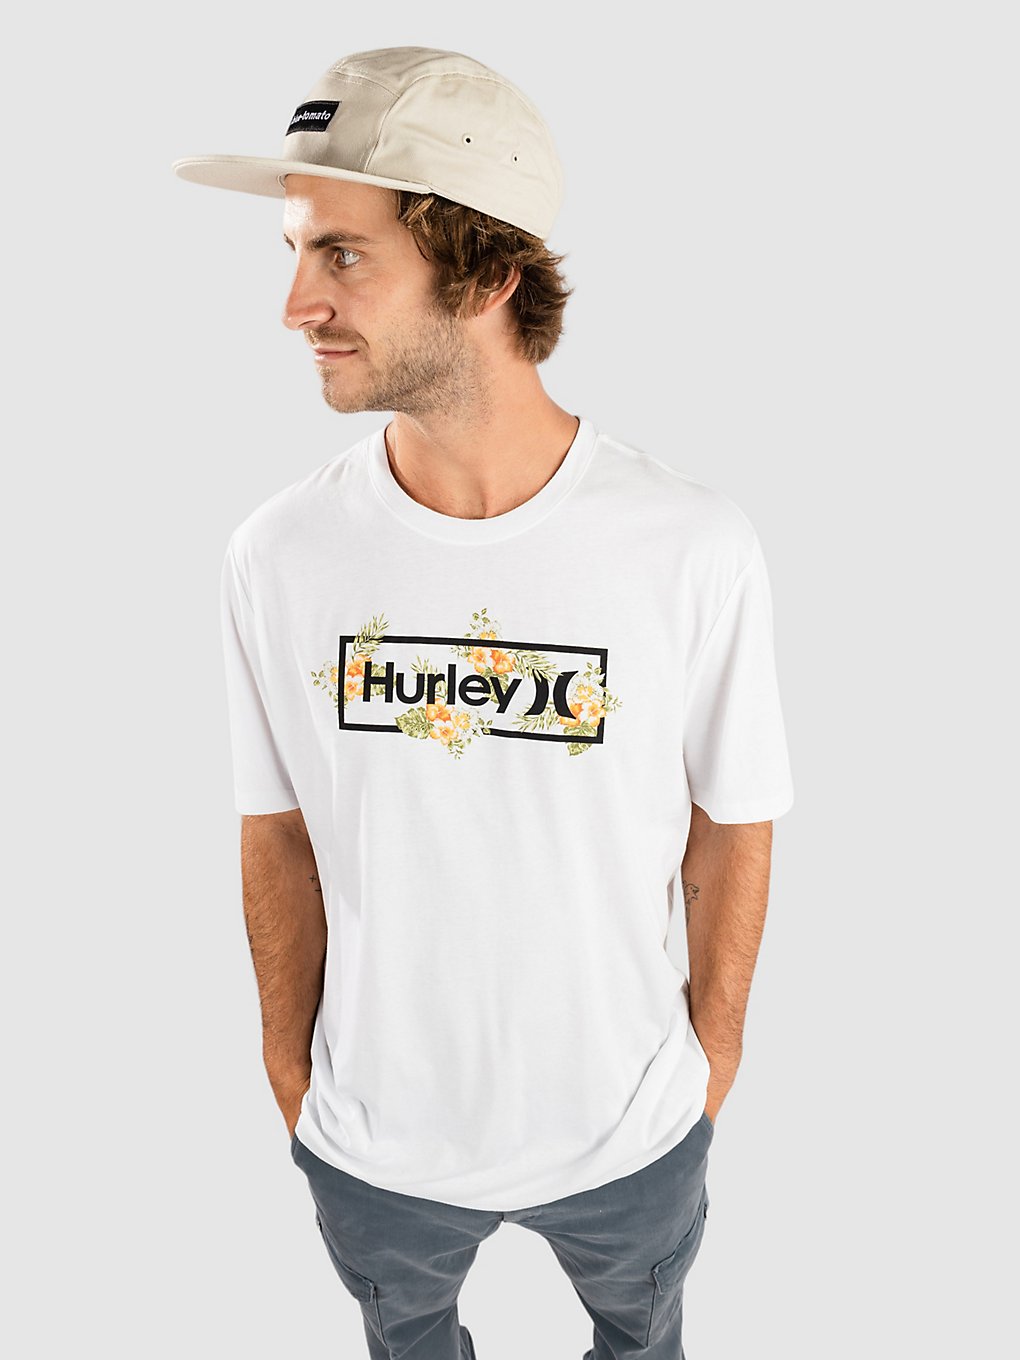 Hurley Evd Congo Outline T-Shirt white kaufen